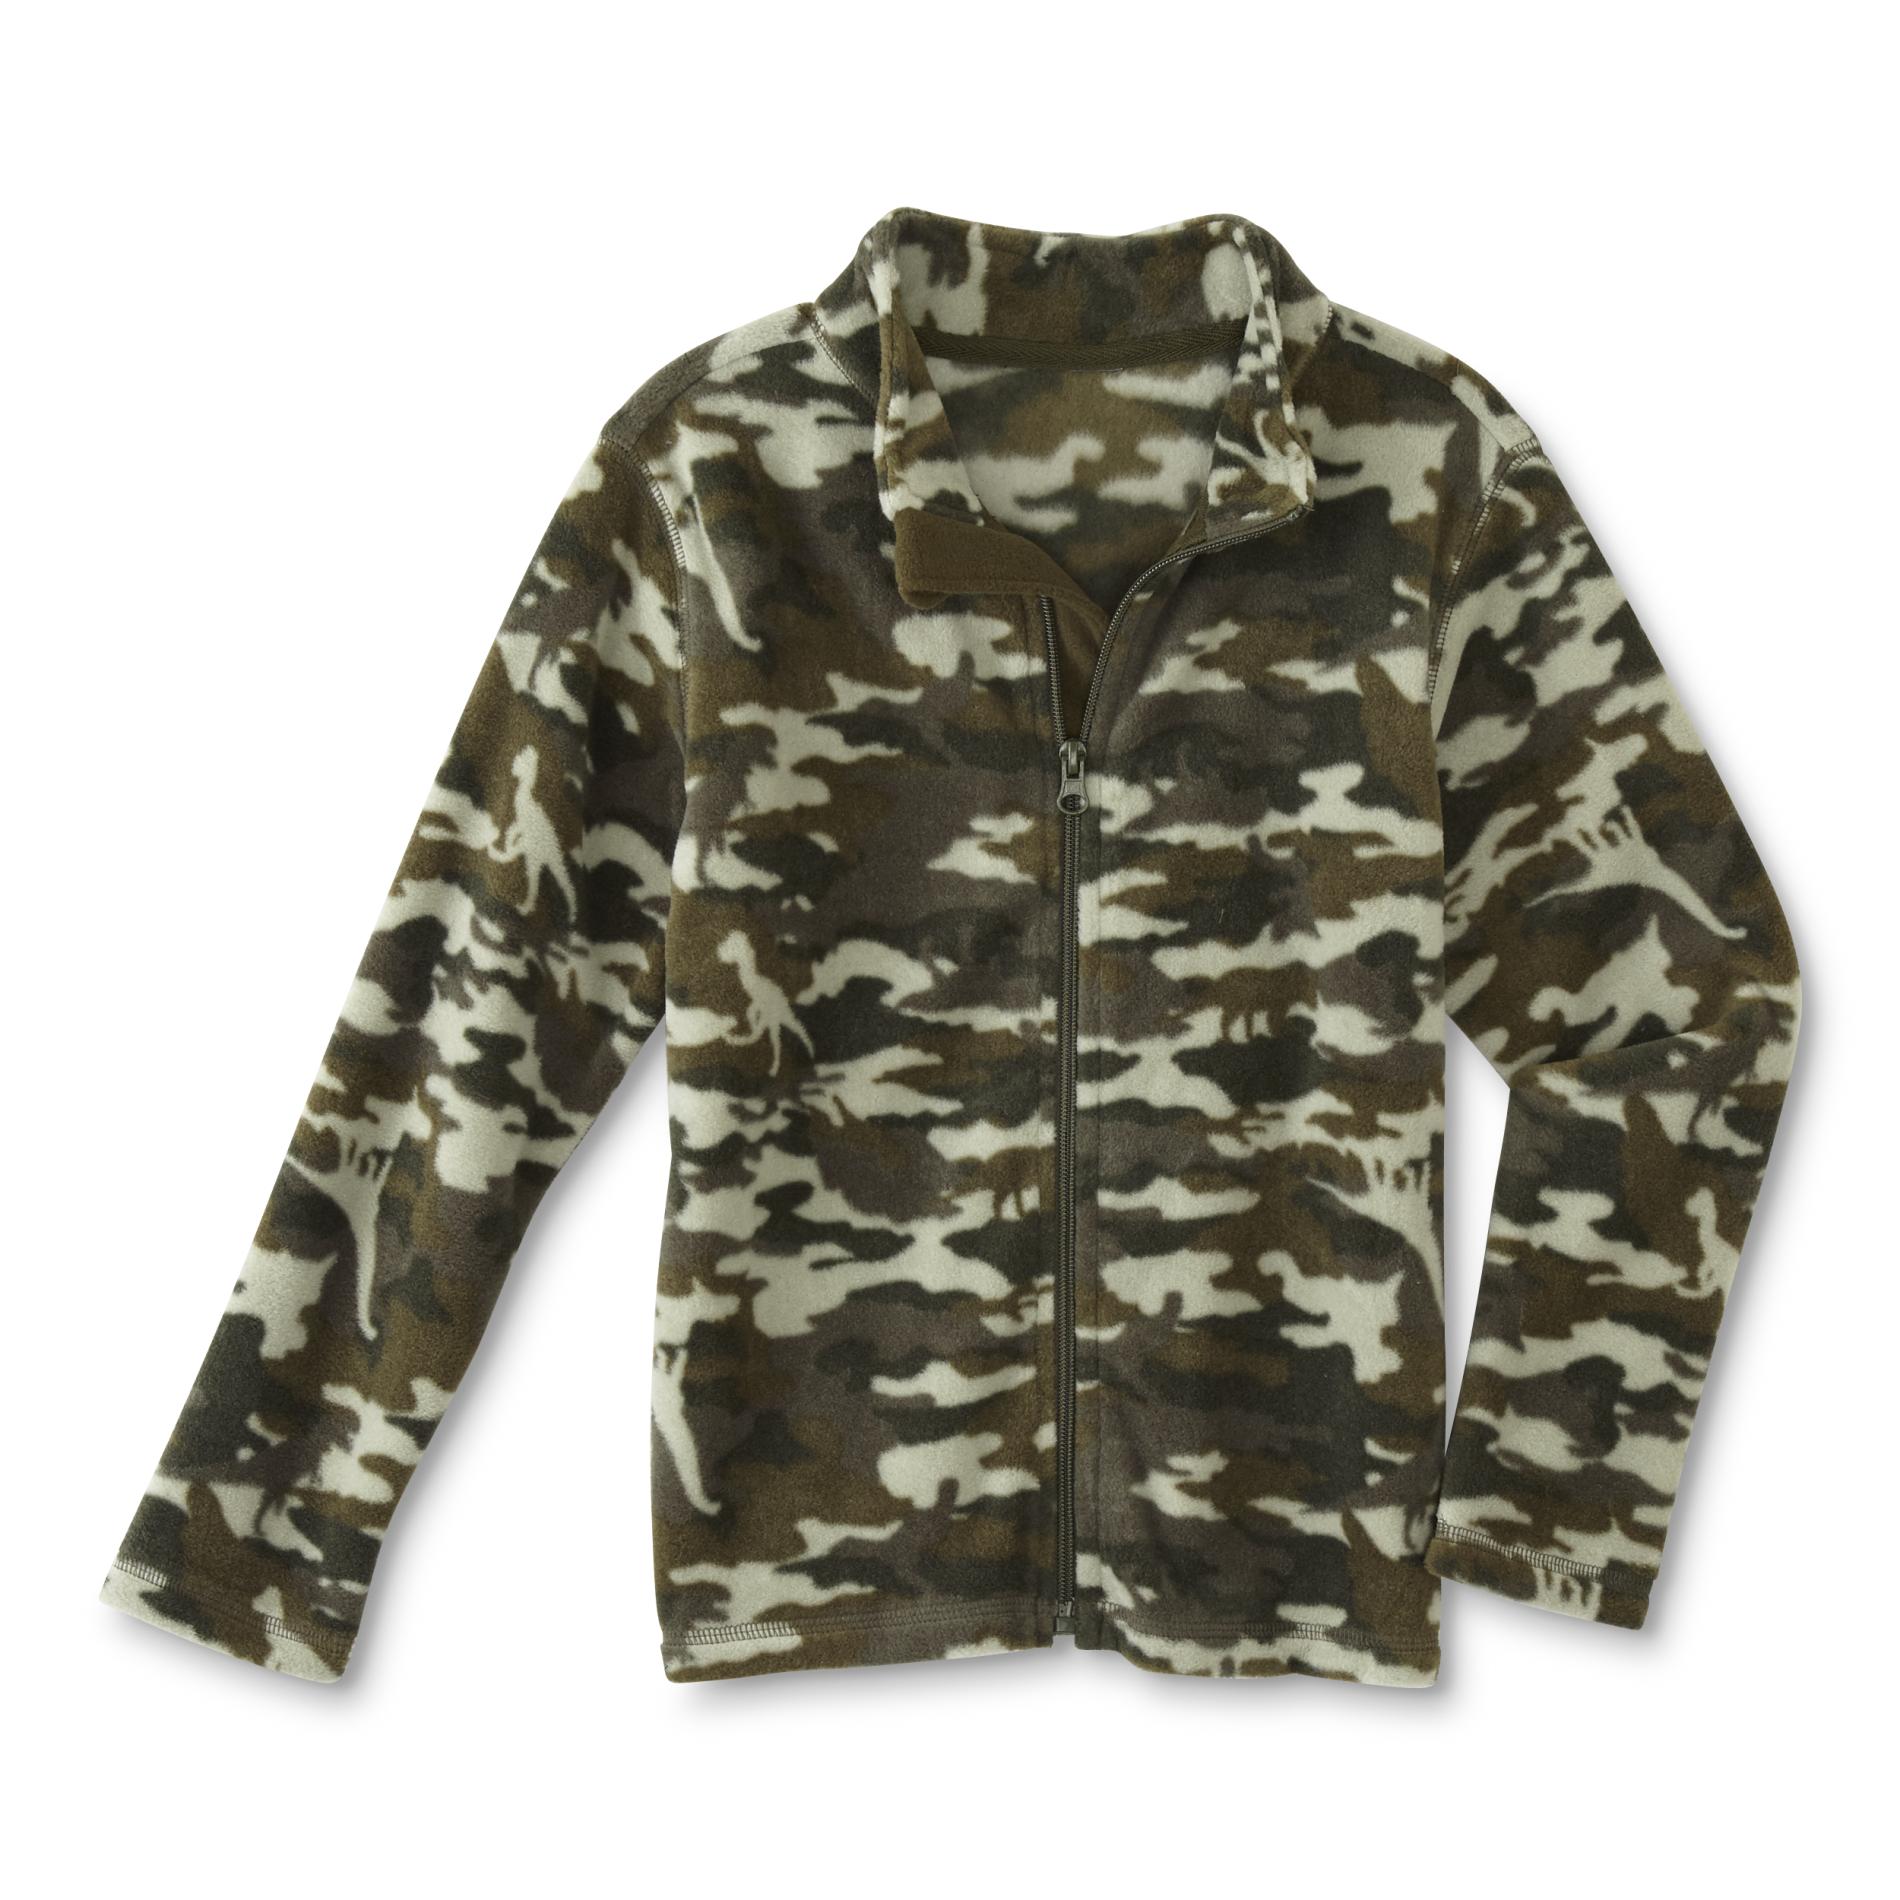 Toughskins Boys' Fleece Jacket - Camouflage